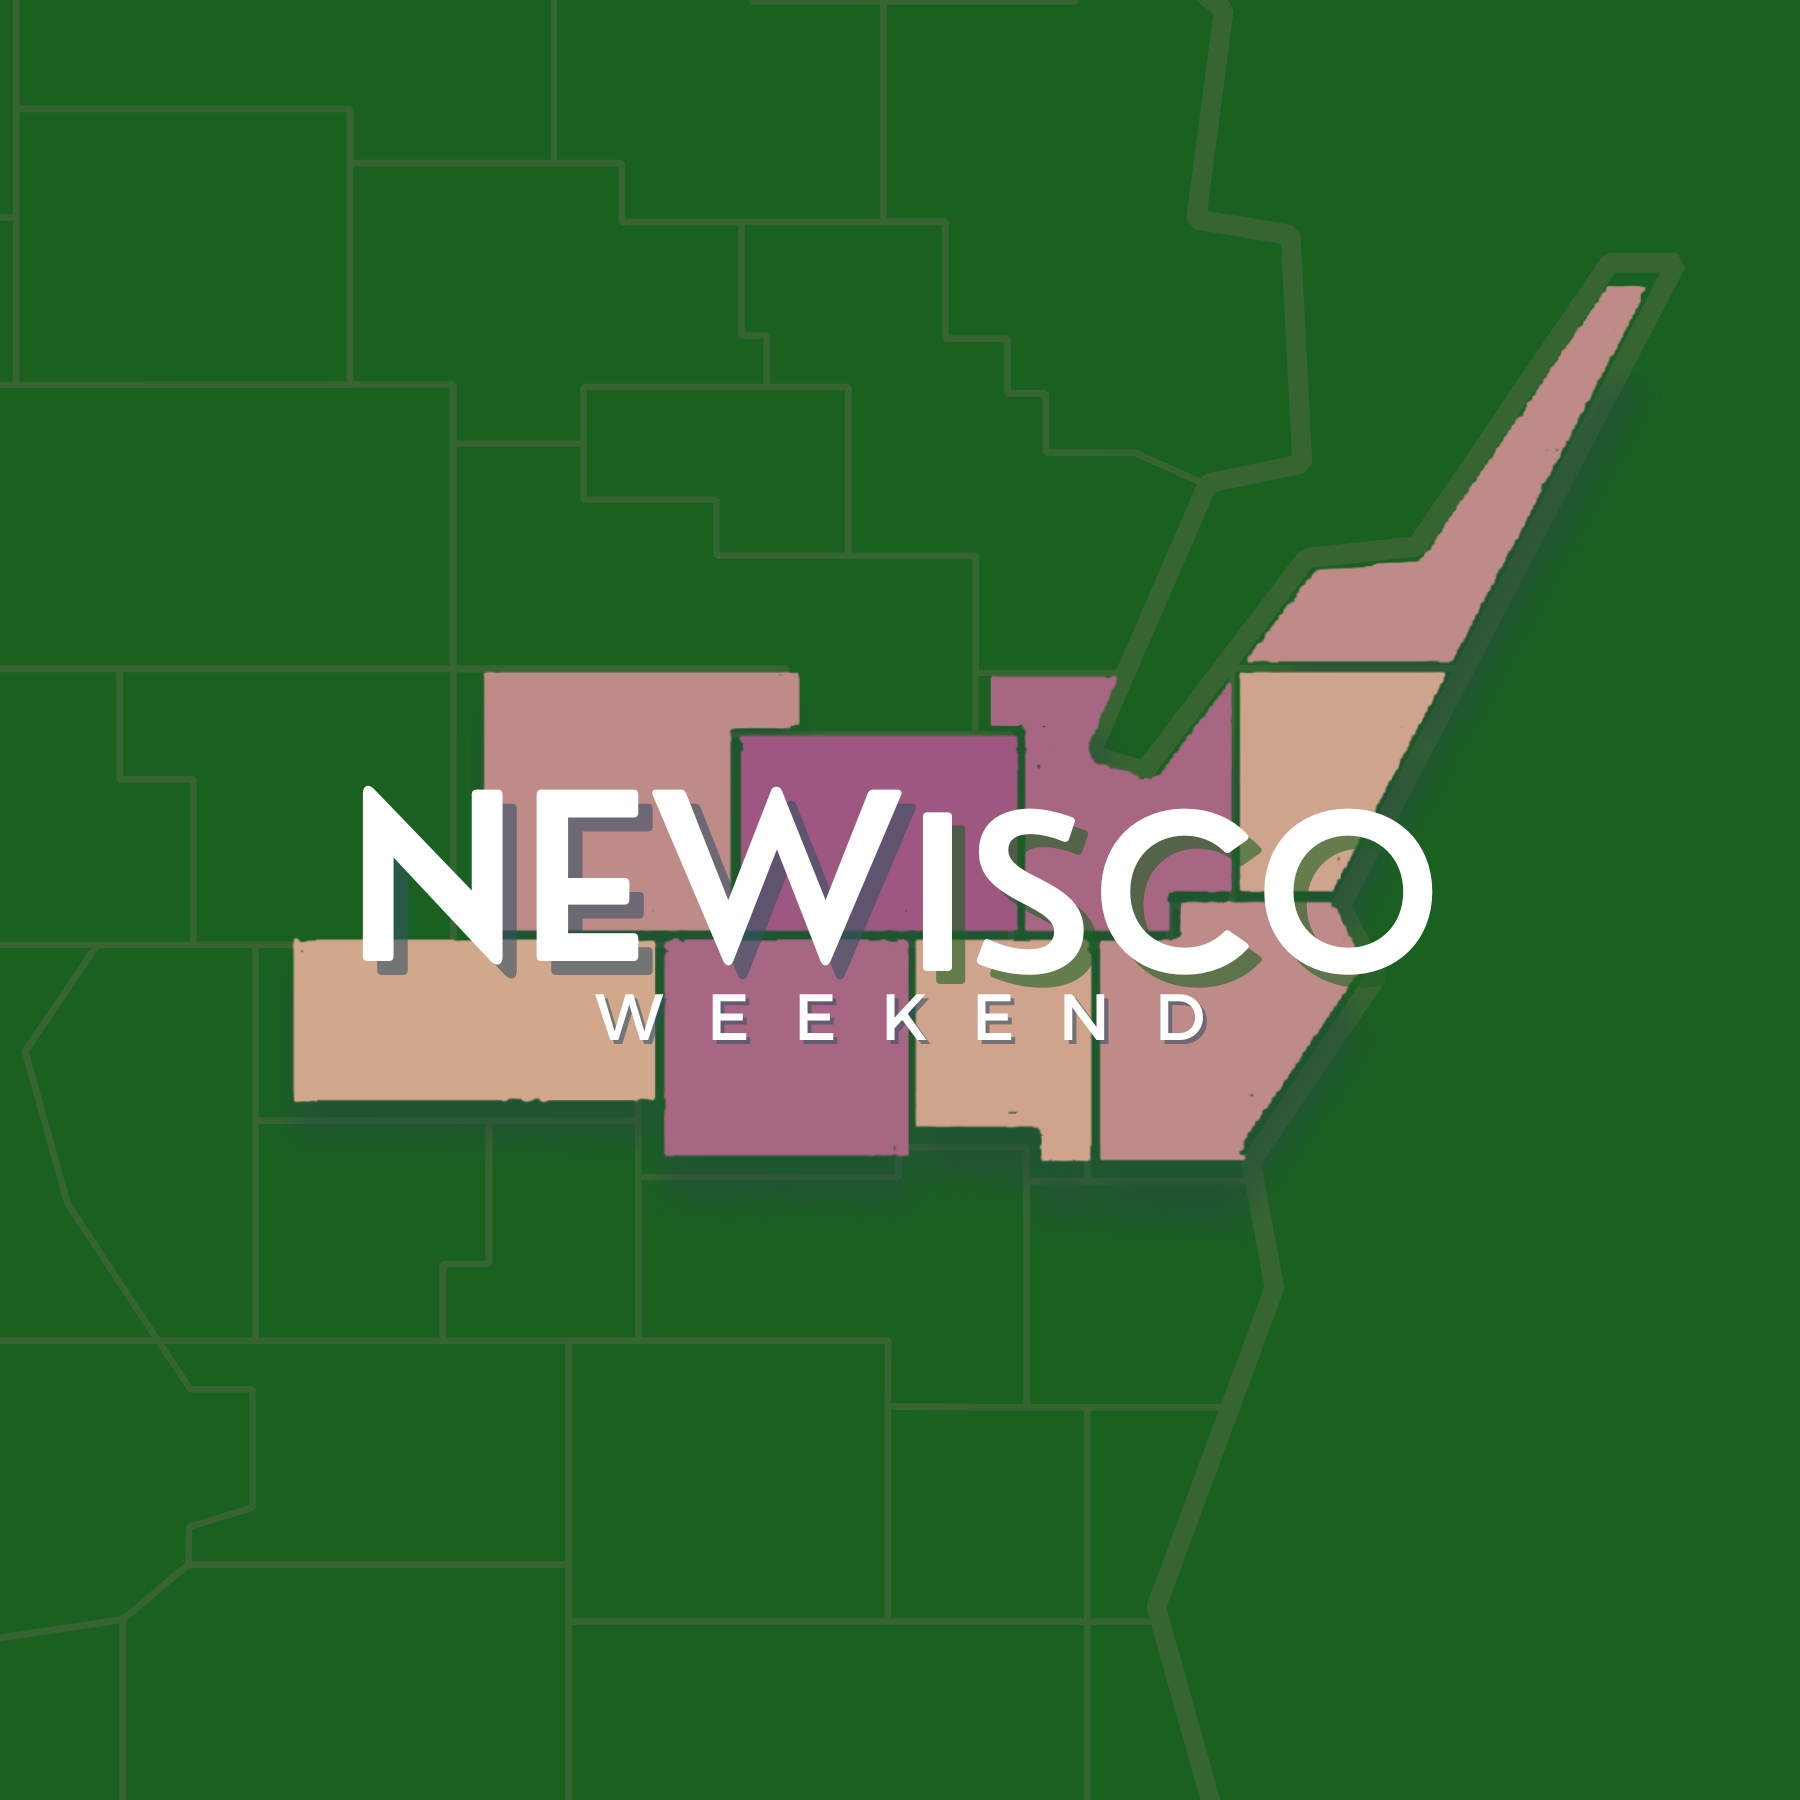 NEWisco Weekend logo